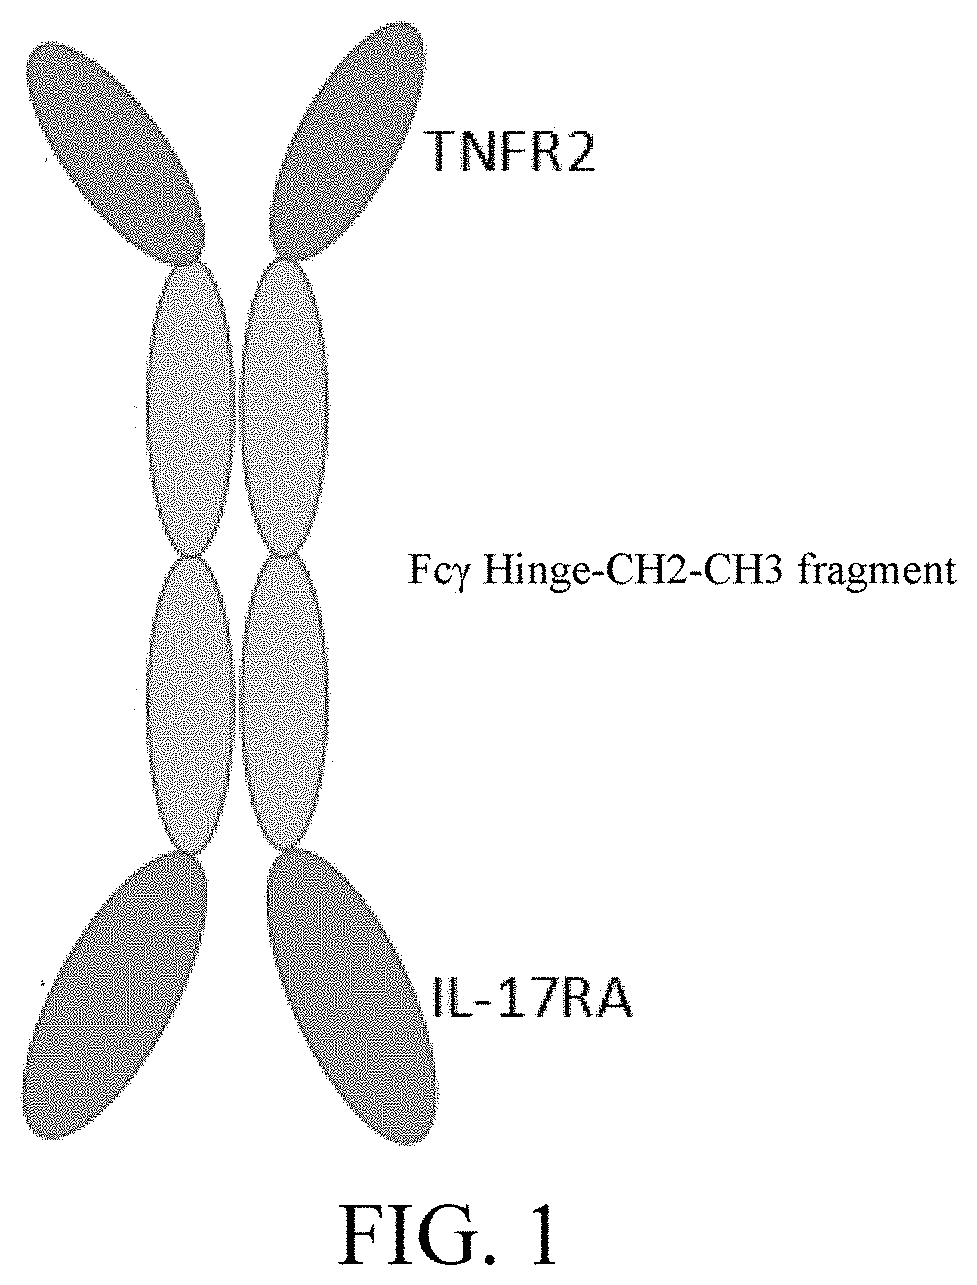 BISPECIFIC FUSION PROTEIN FOR IL-17 AND TNF-alpha